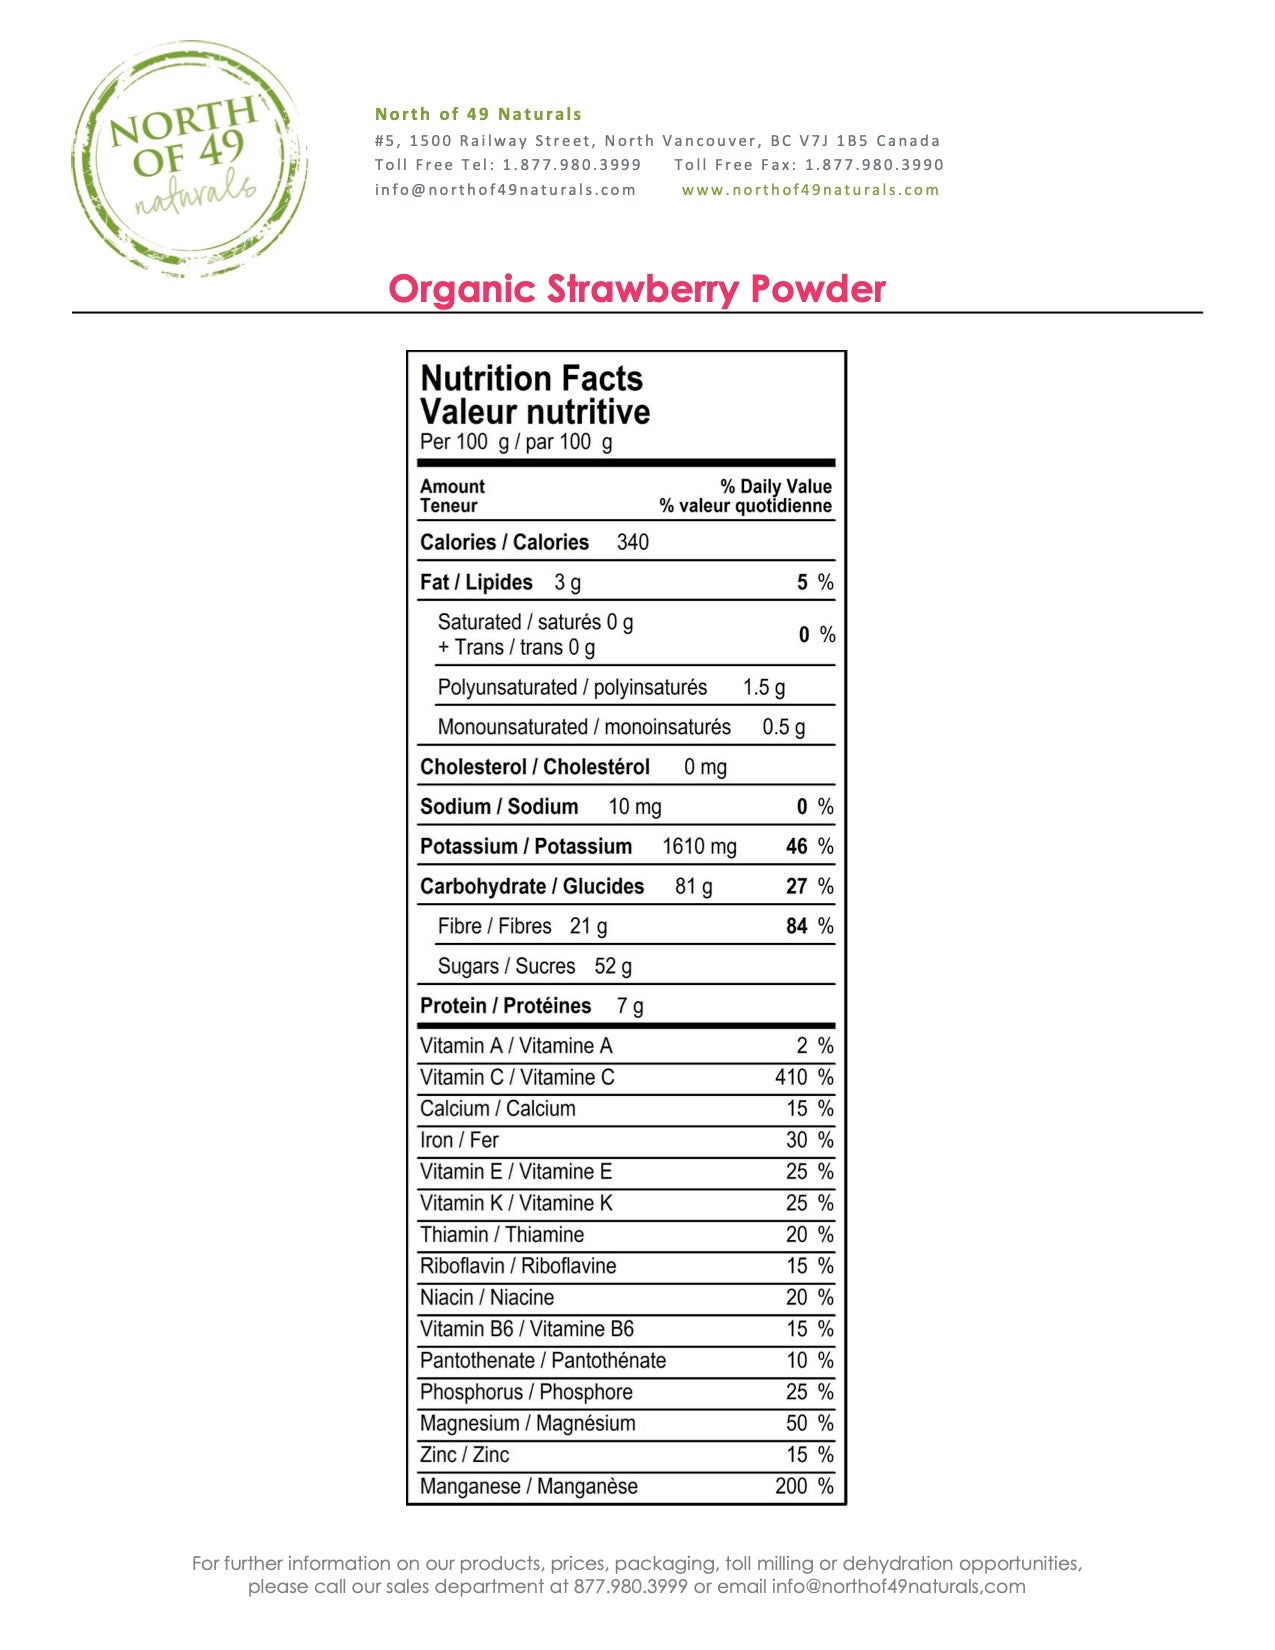 Organic Strawberry Powder Nutritional Facts